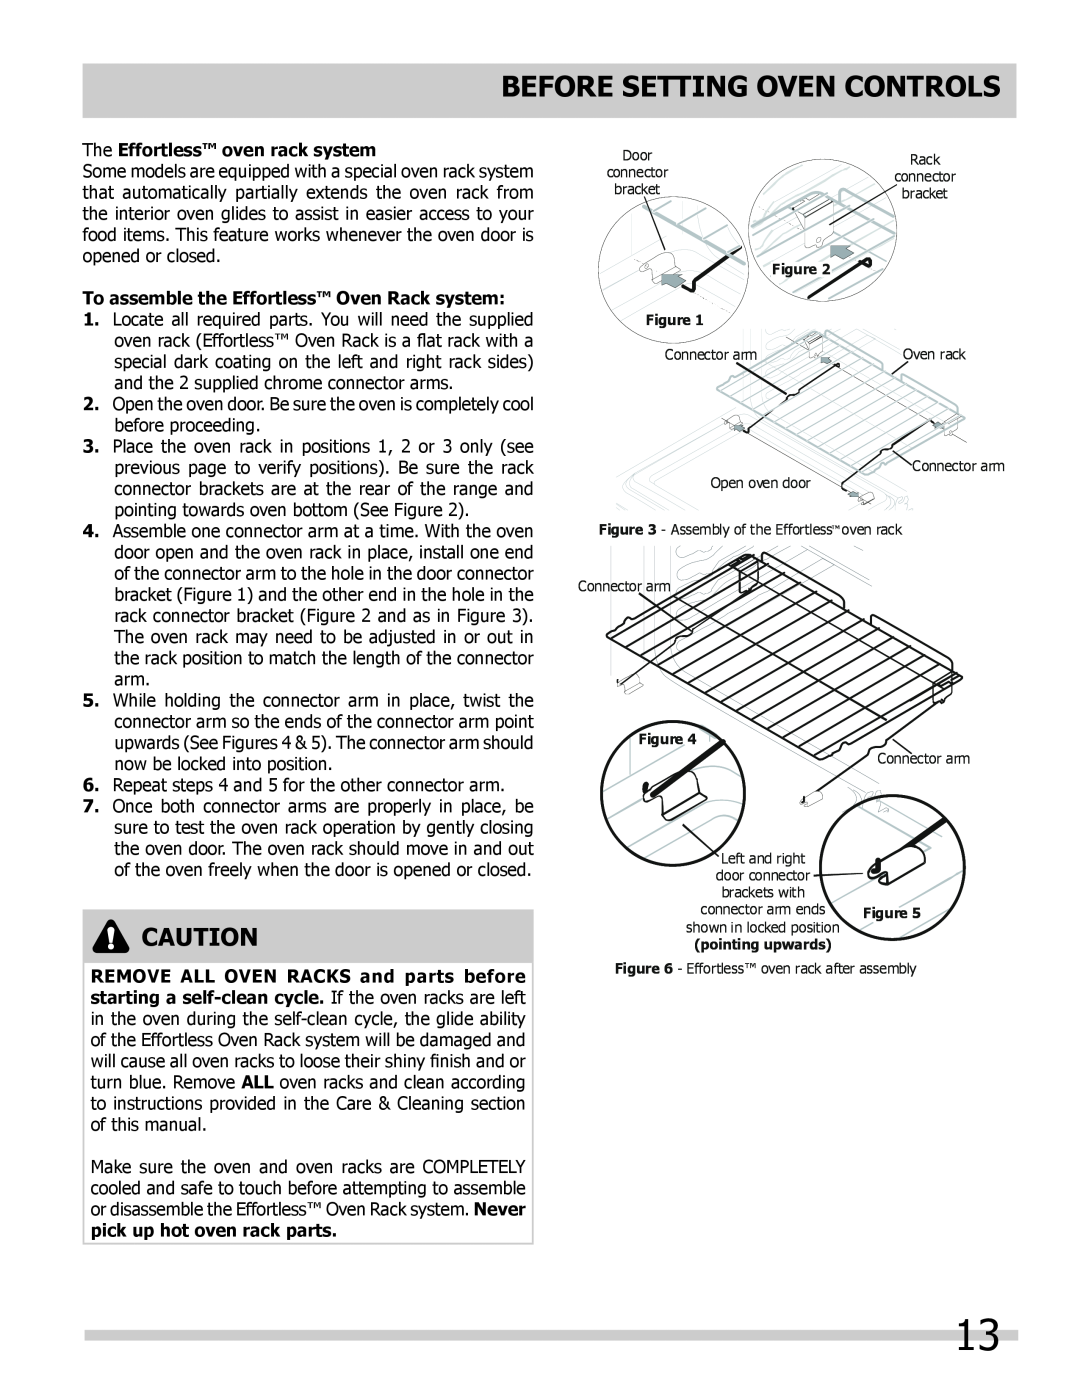 Frigidaire FGGS3045KW The Effortless oven rack system, To assemble the Effortless Oven Rack system, Figure Figure 